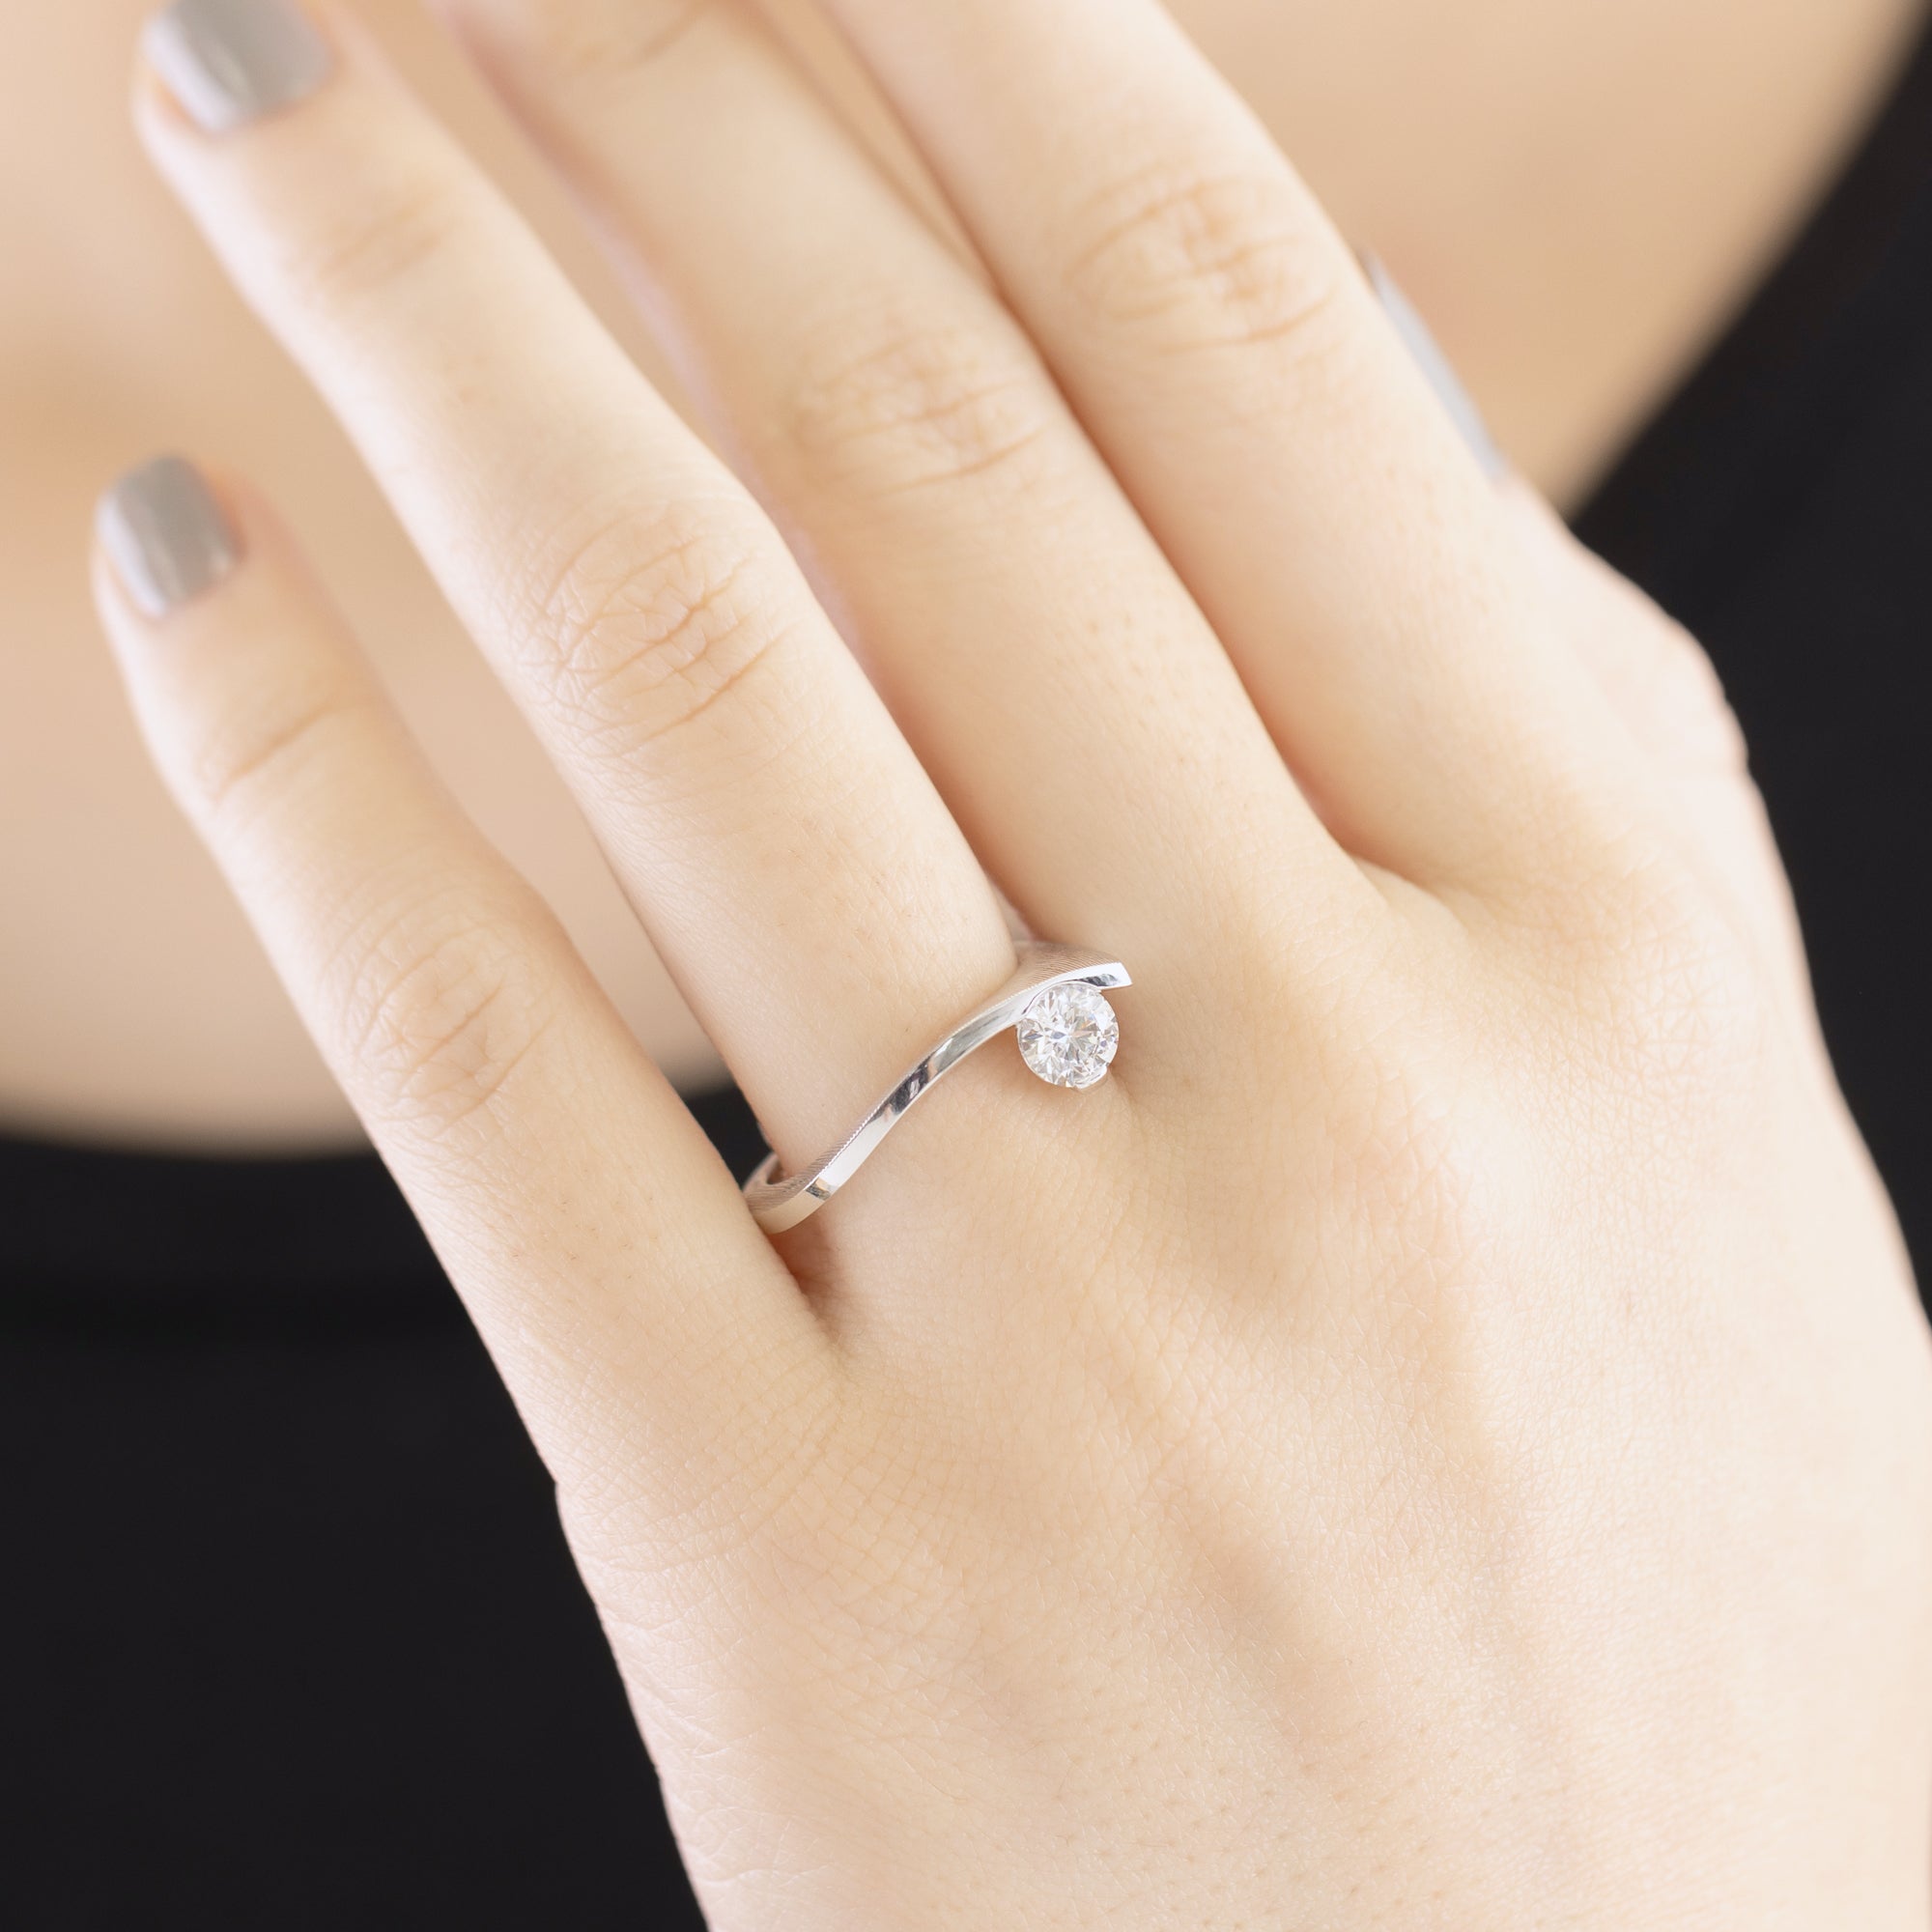 Sorow[そろう] Pt950 Diamond ring engagement ring Japanese jewelry MENTOSEN